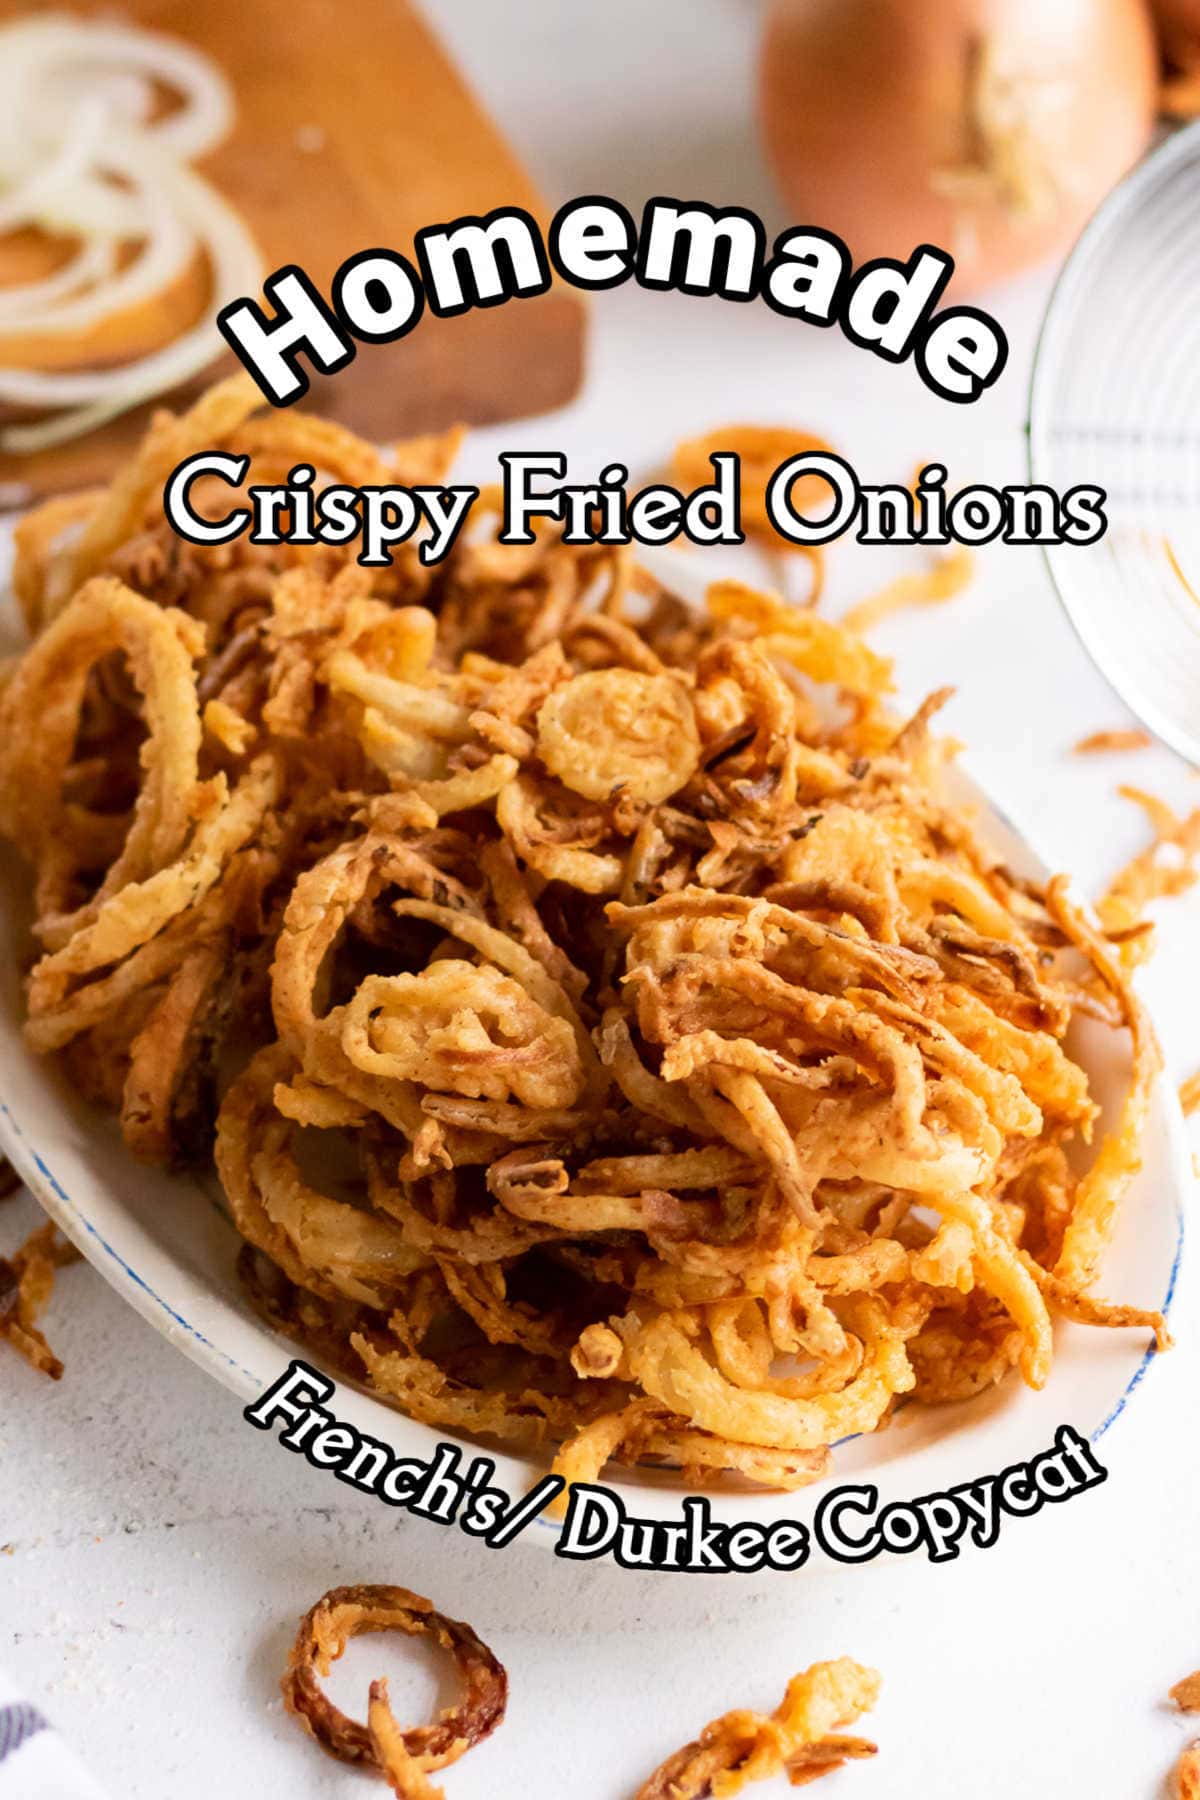 https://www.restlesschipotle.com/wp-content/uploads/2020/12/crispy-fried-onions-11-14-copy-1.jpg